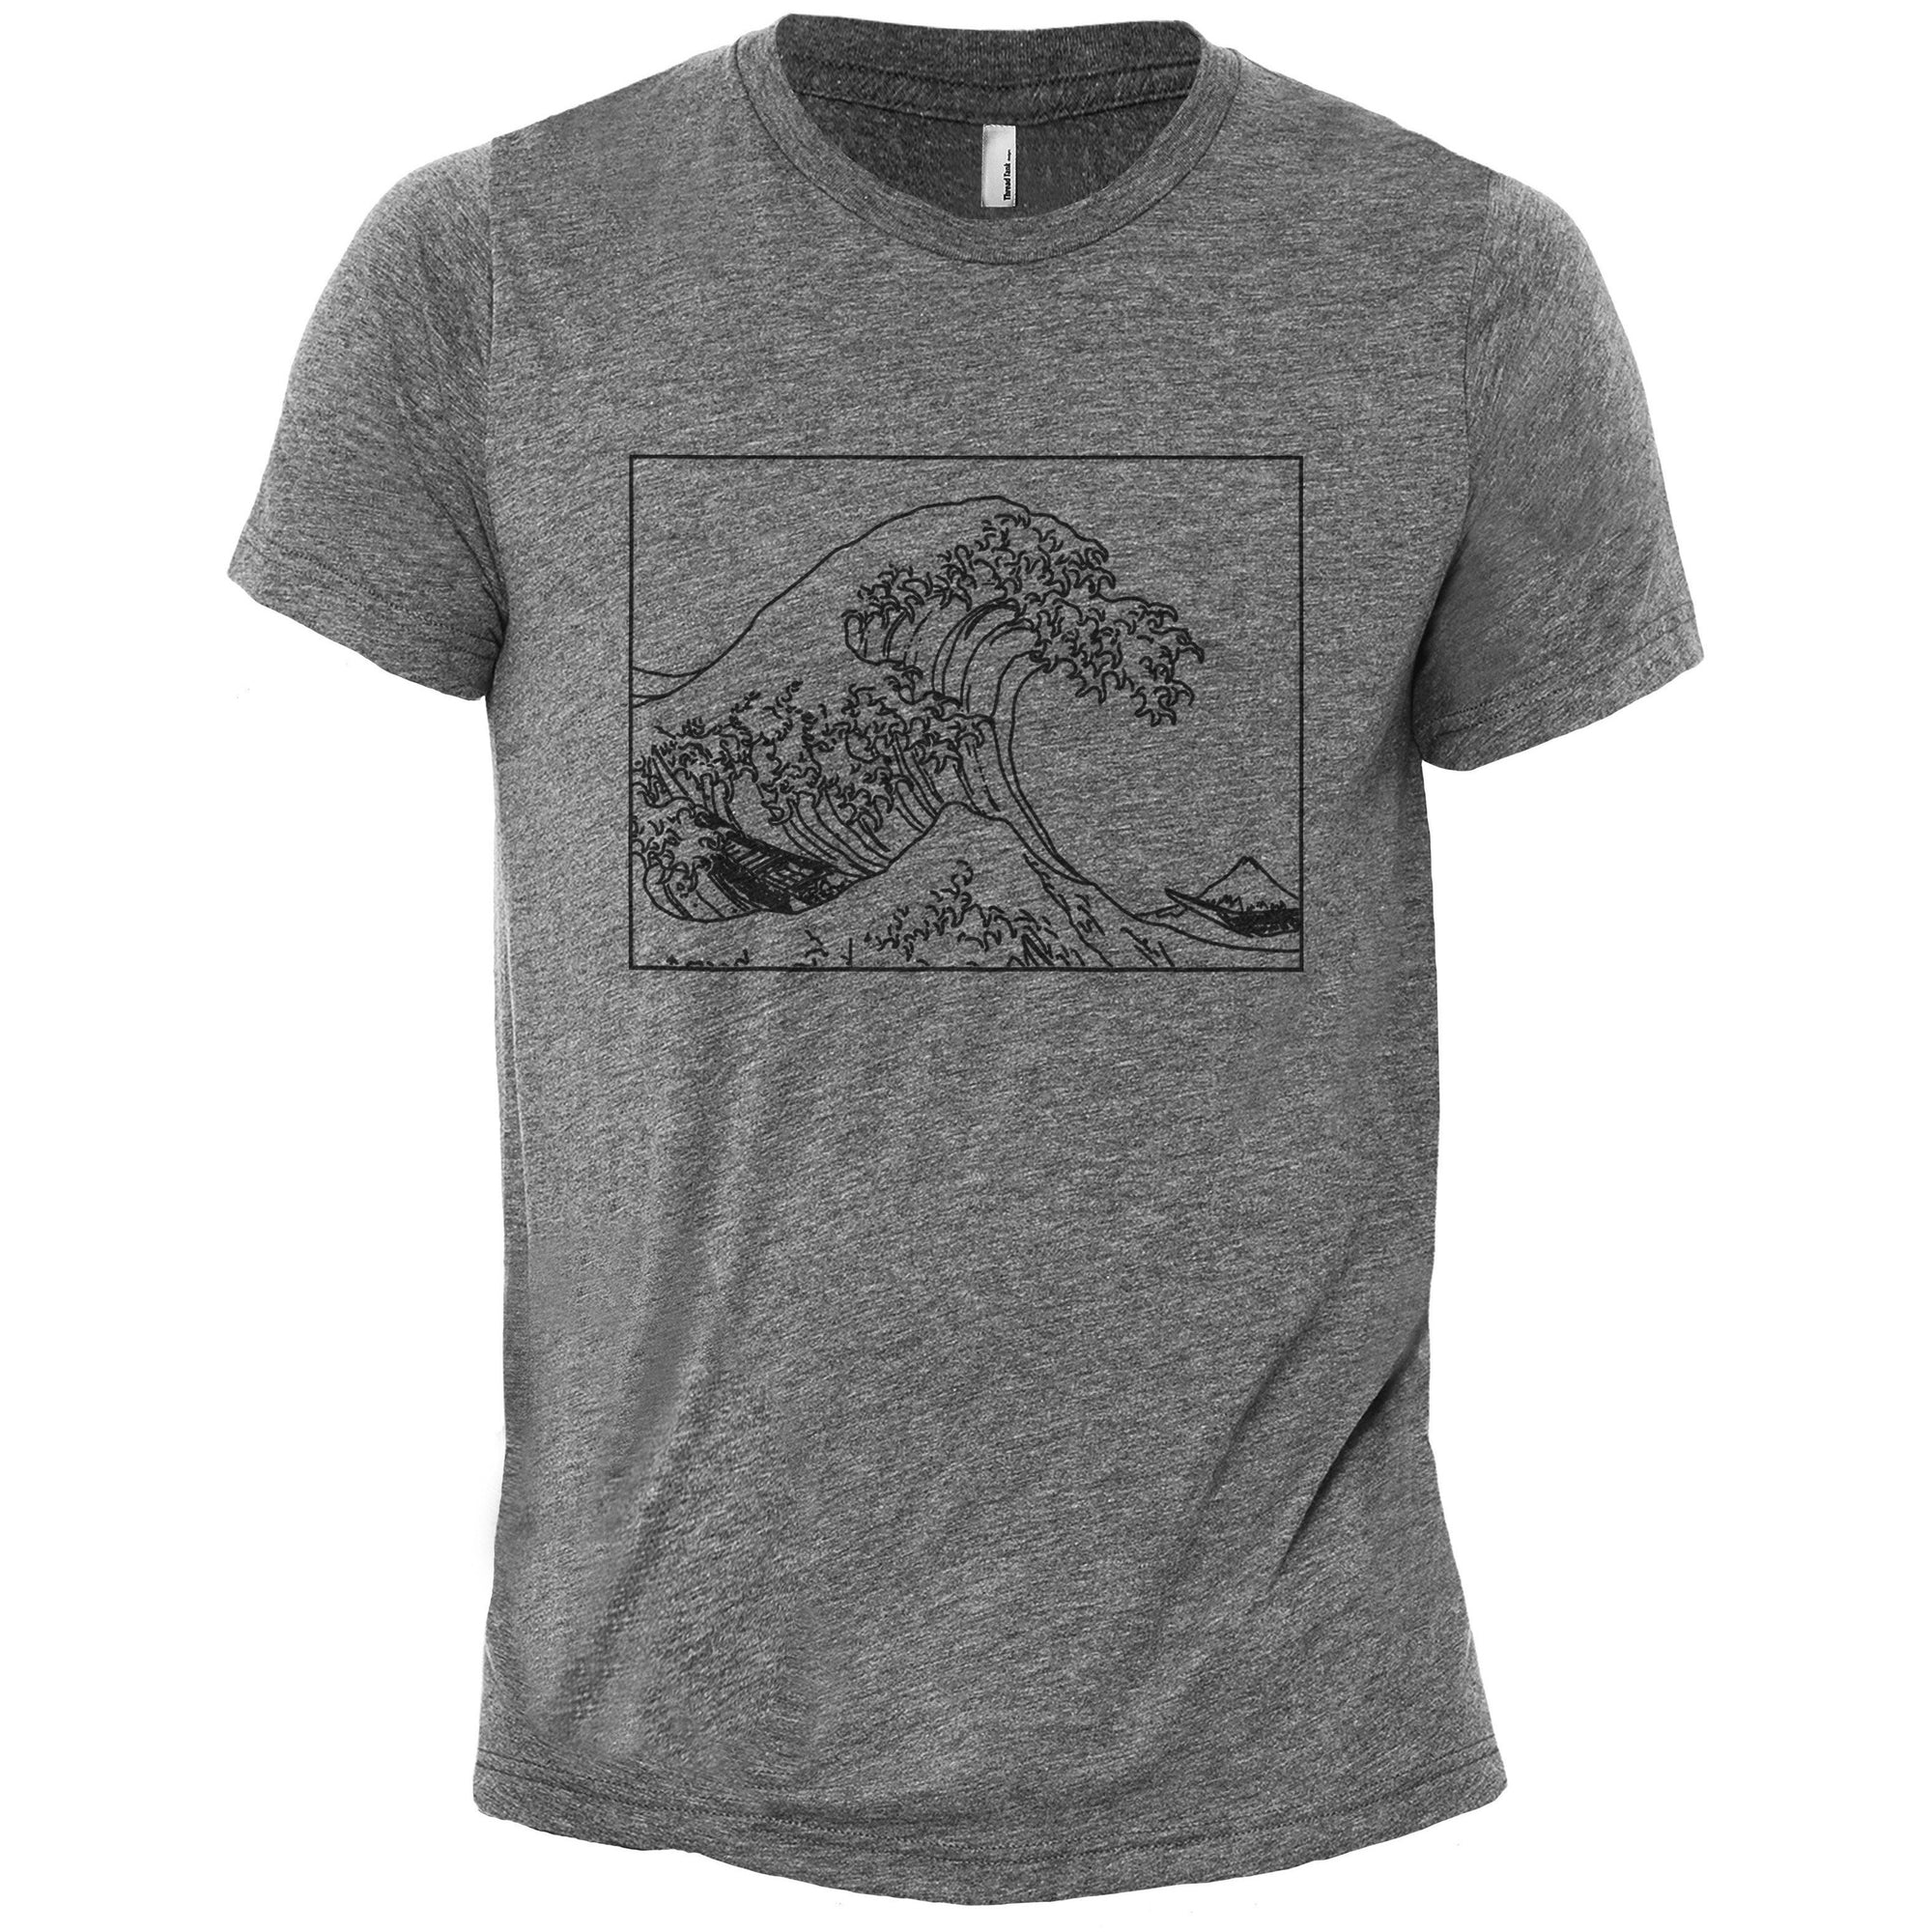 Great Waves Hokusai Heather Grey Printed Graphic Men's Crew T-Shirt Tee